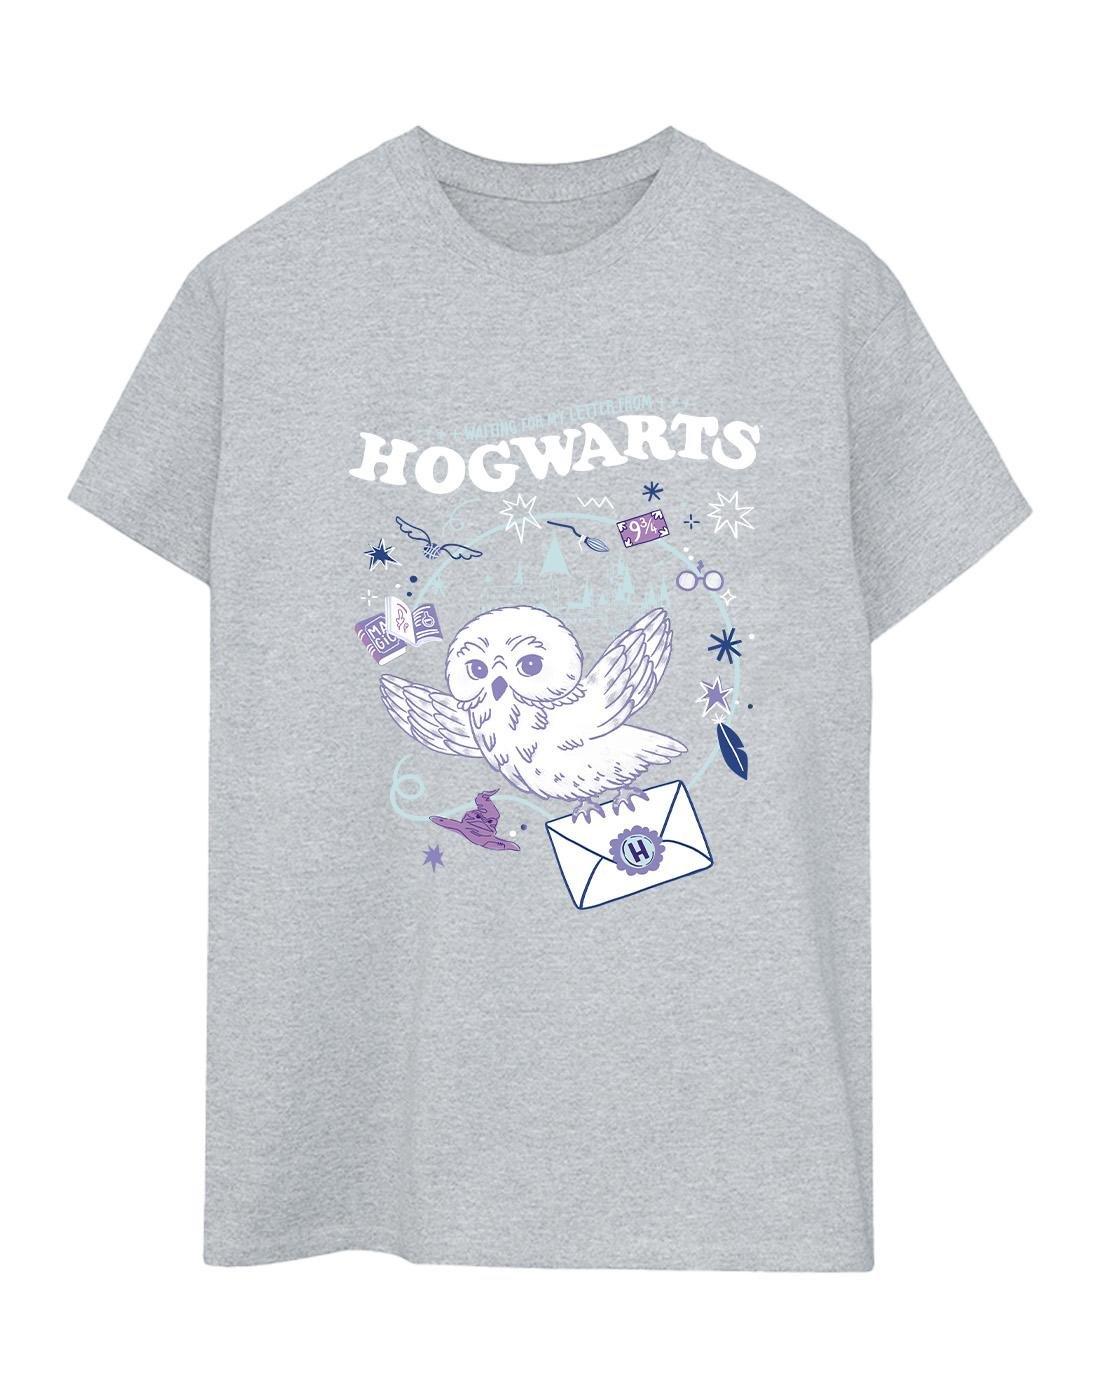 Harry Potter  Tshirt OWL LETTER FROM HOGWARTS 